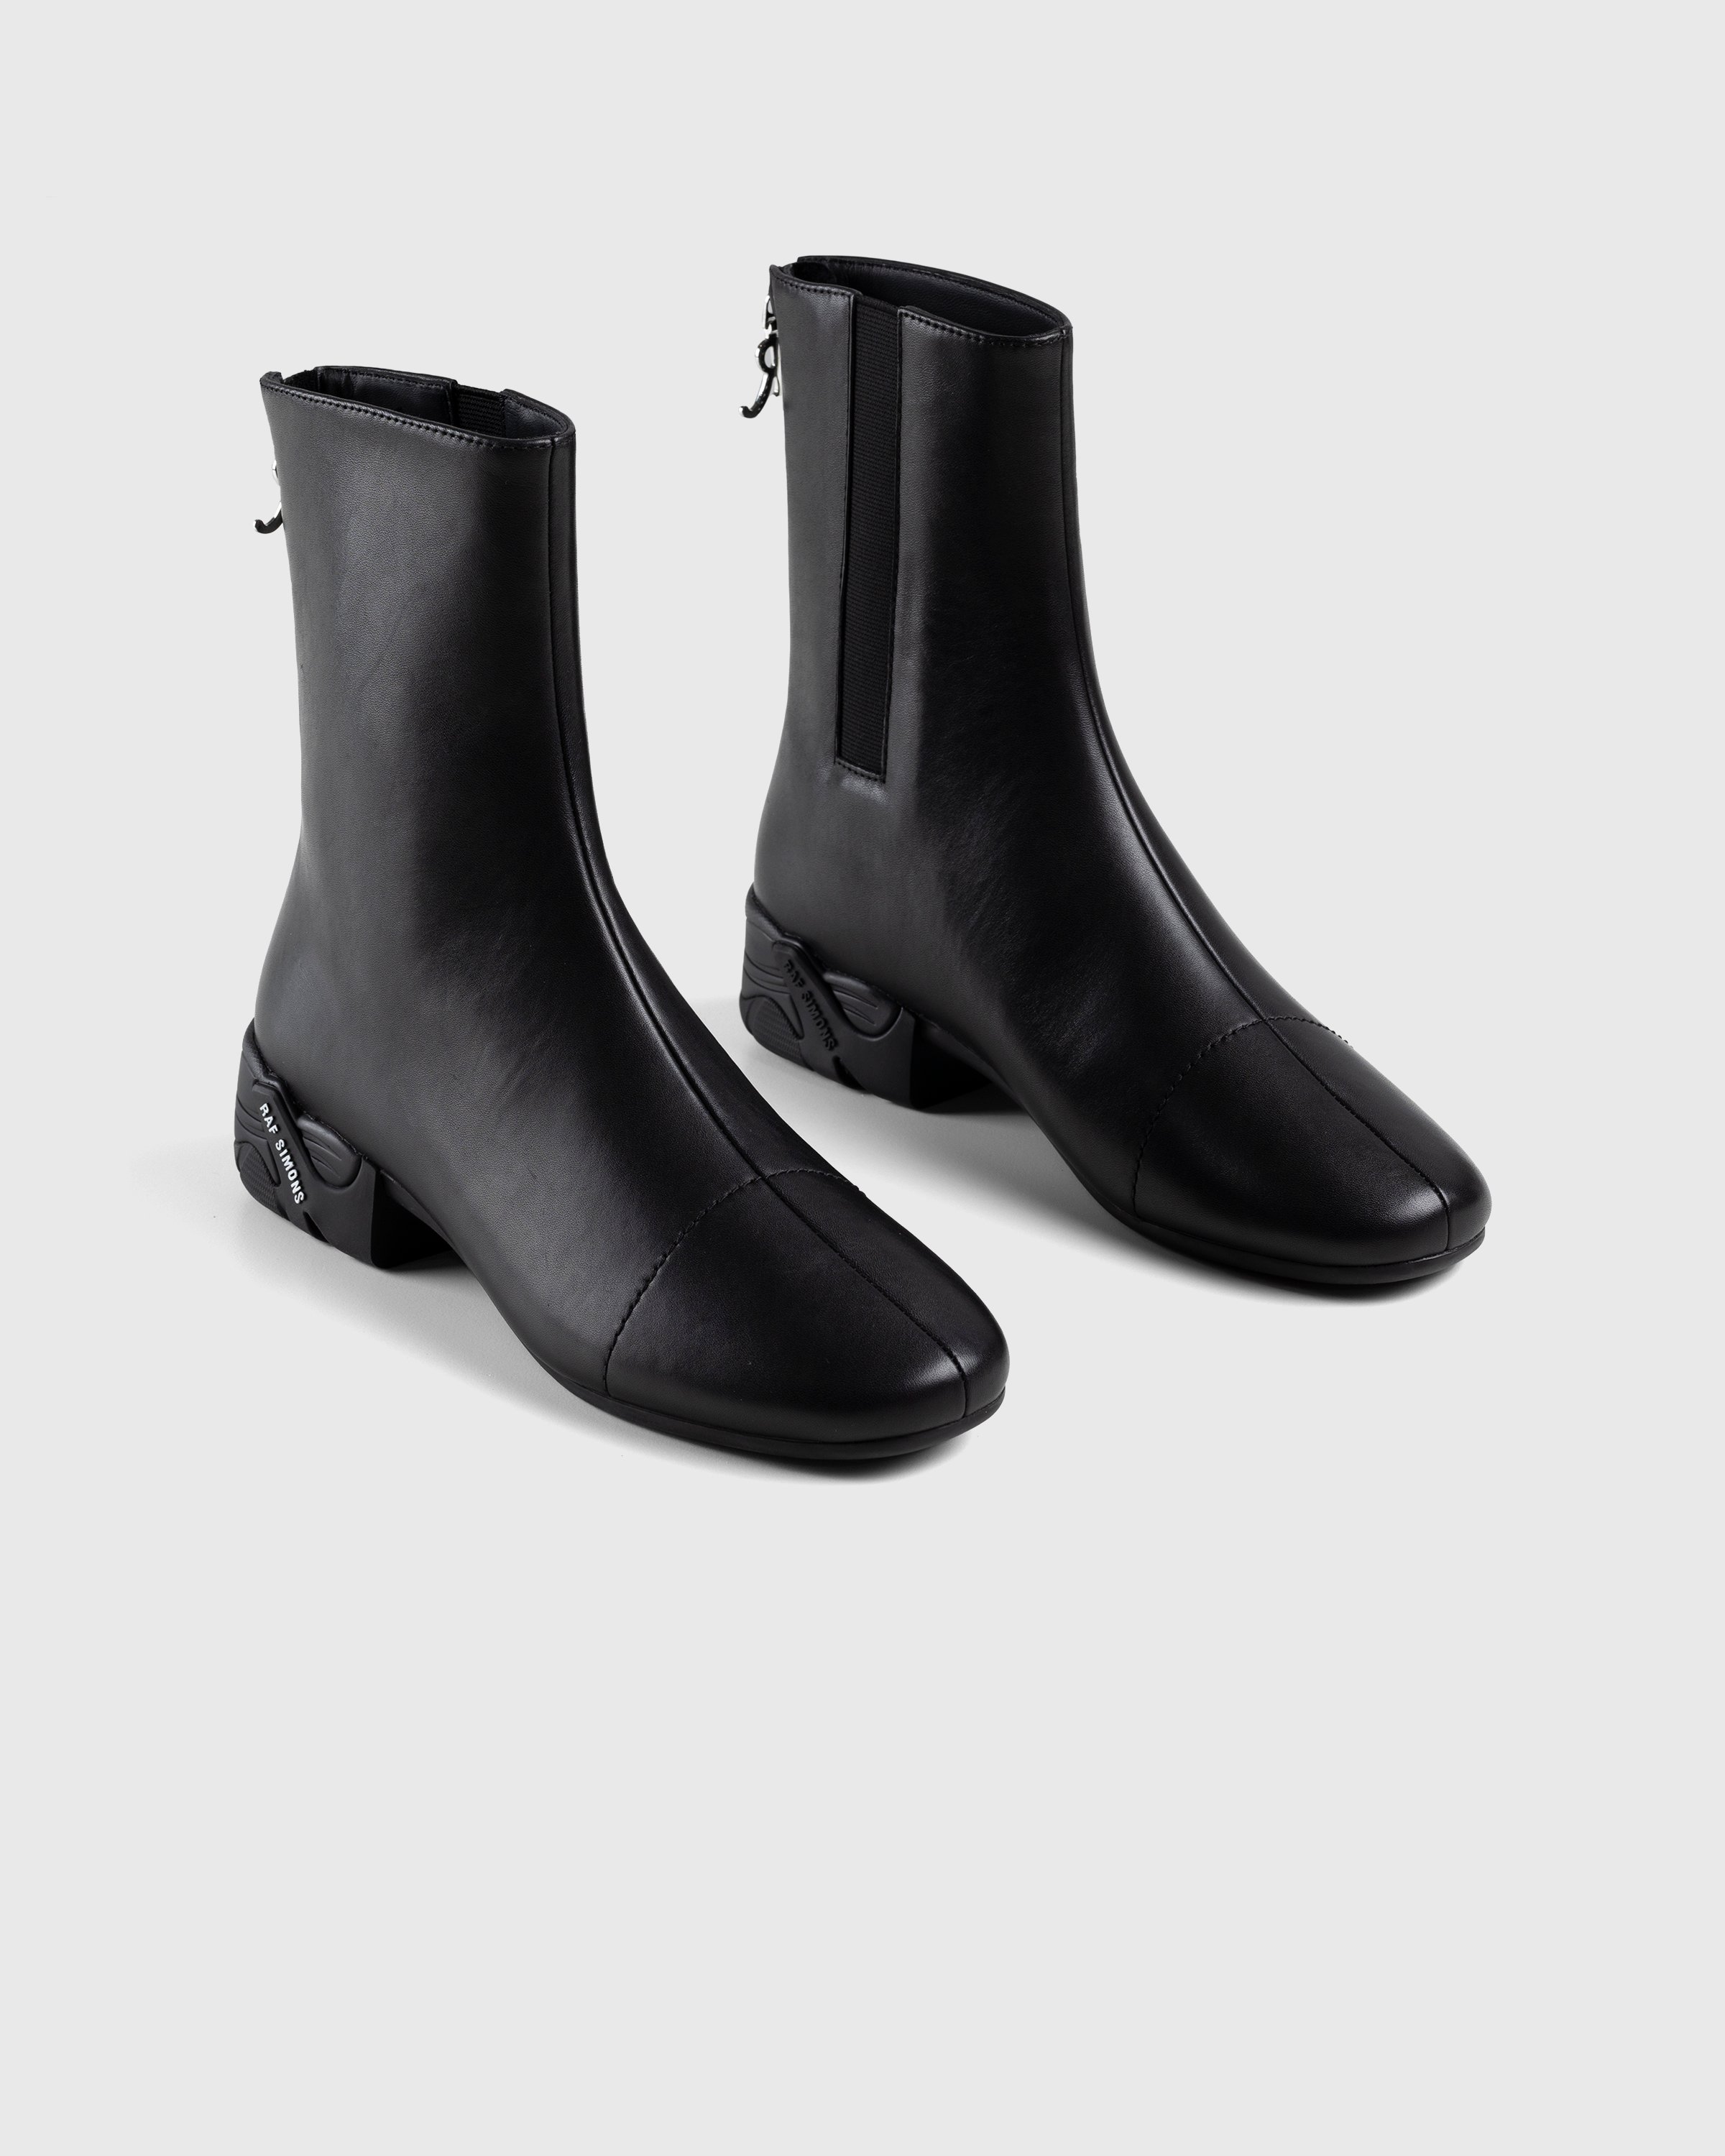 Raf Simons - Solaris High Leather Boot Black - Footwear - Black - Image 3